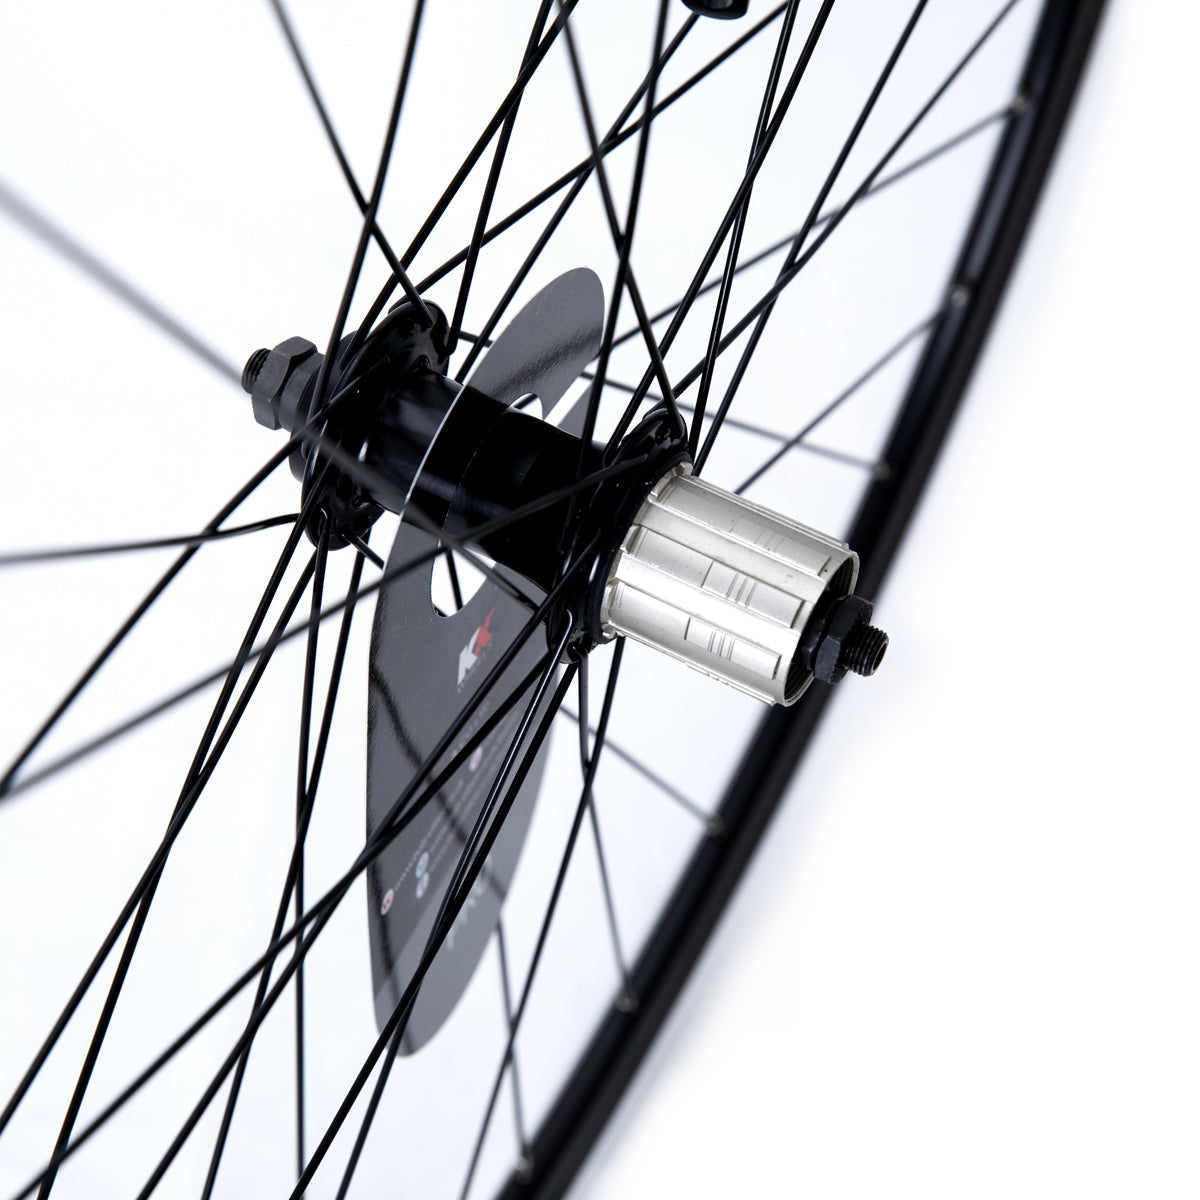 KX Wheels Pro QR Sealed Bearing 11 Speed 700c Bike Wheel Set Alternate 3